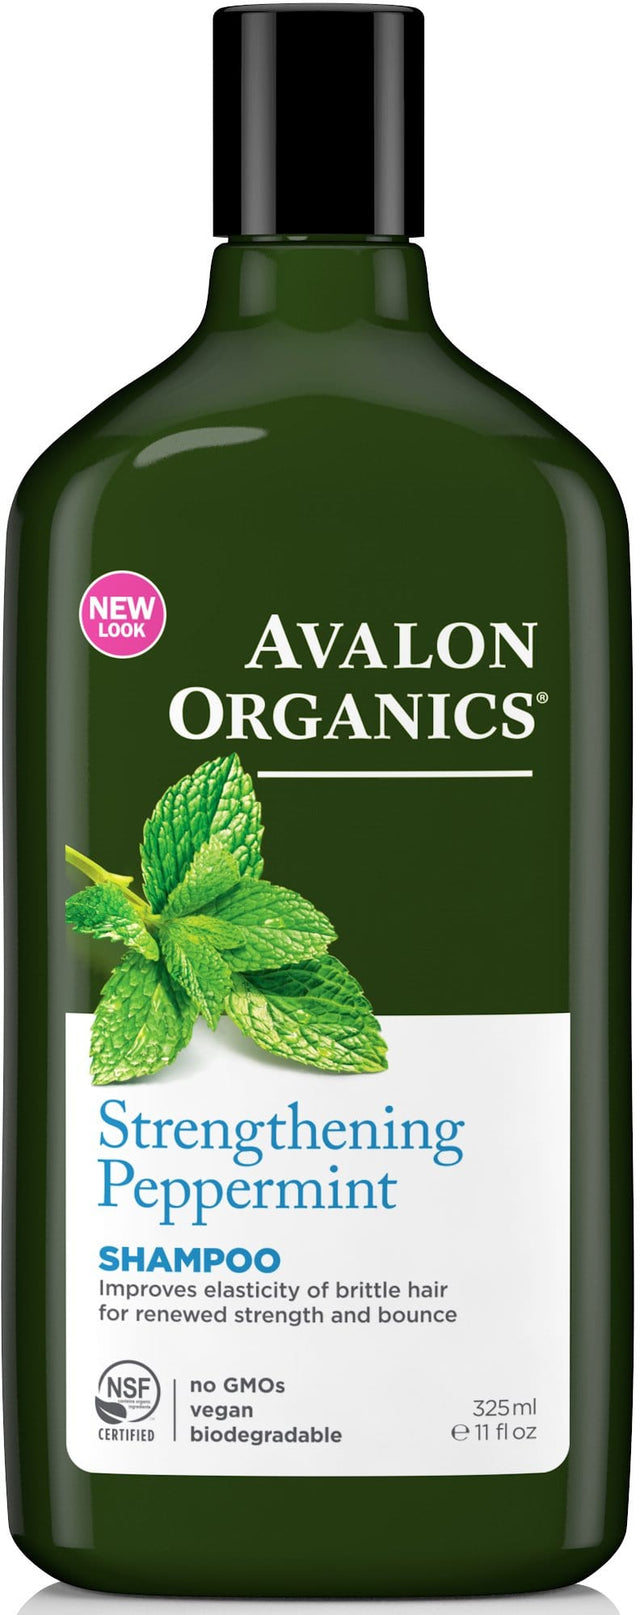 Avalon Organics Peppermint Shampoo, 325ml